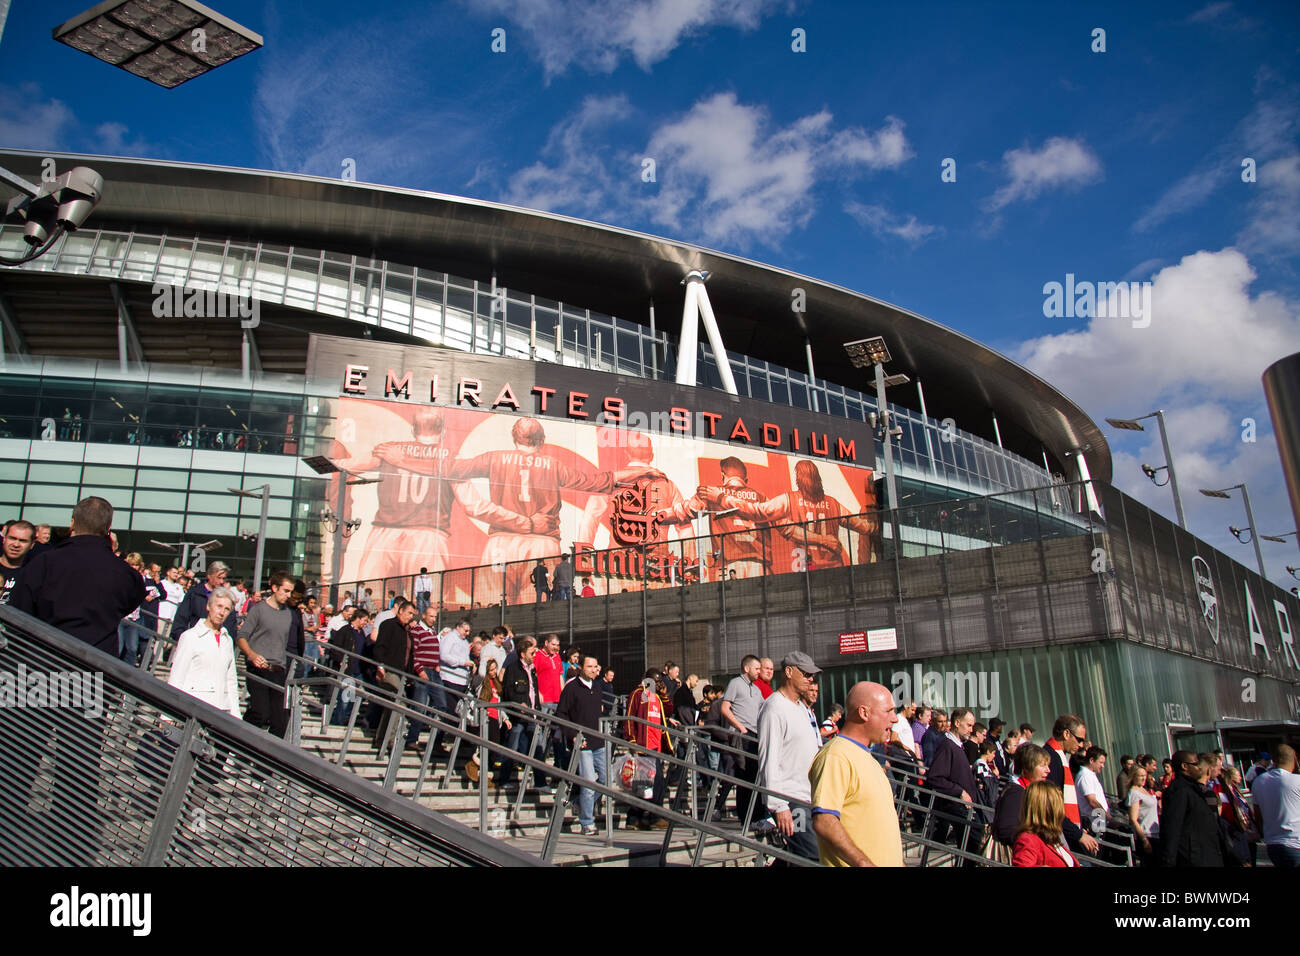 Fans Leaving the Emirates Stadium - Arsenal FC Home Ground Stock Photo